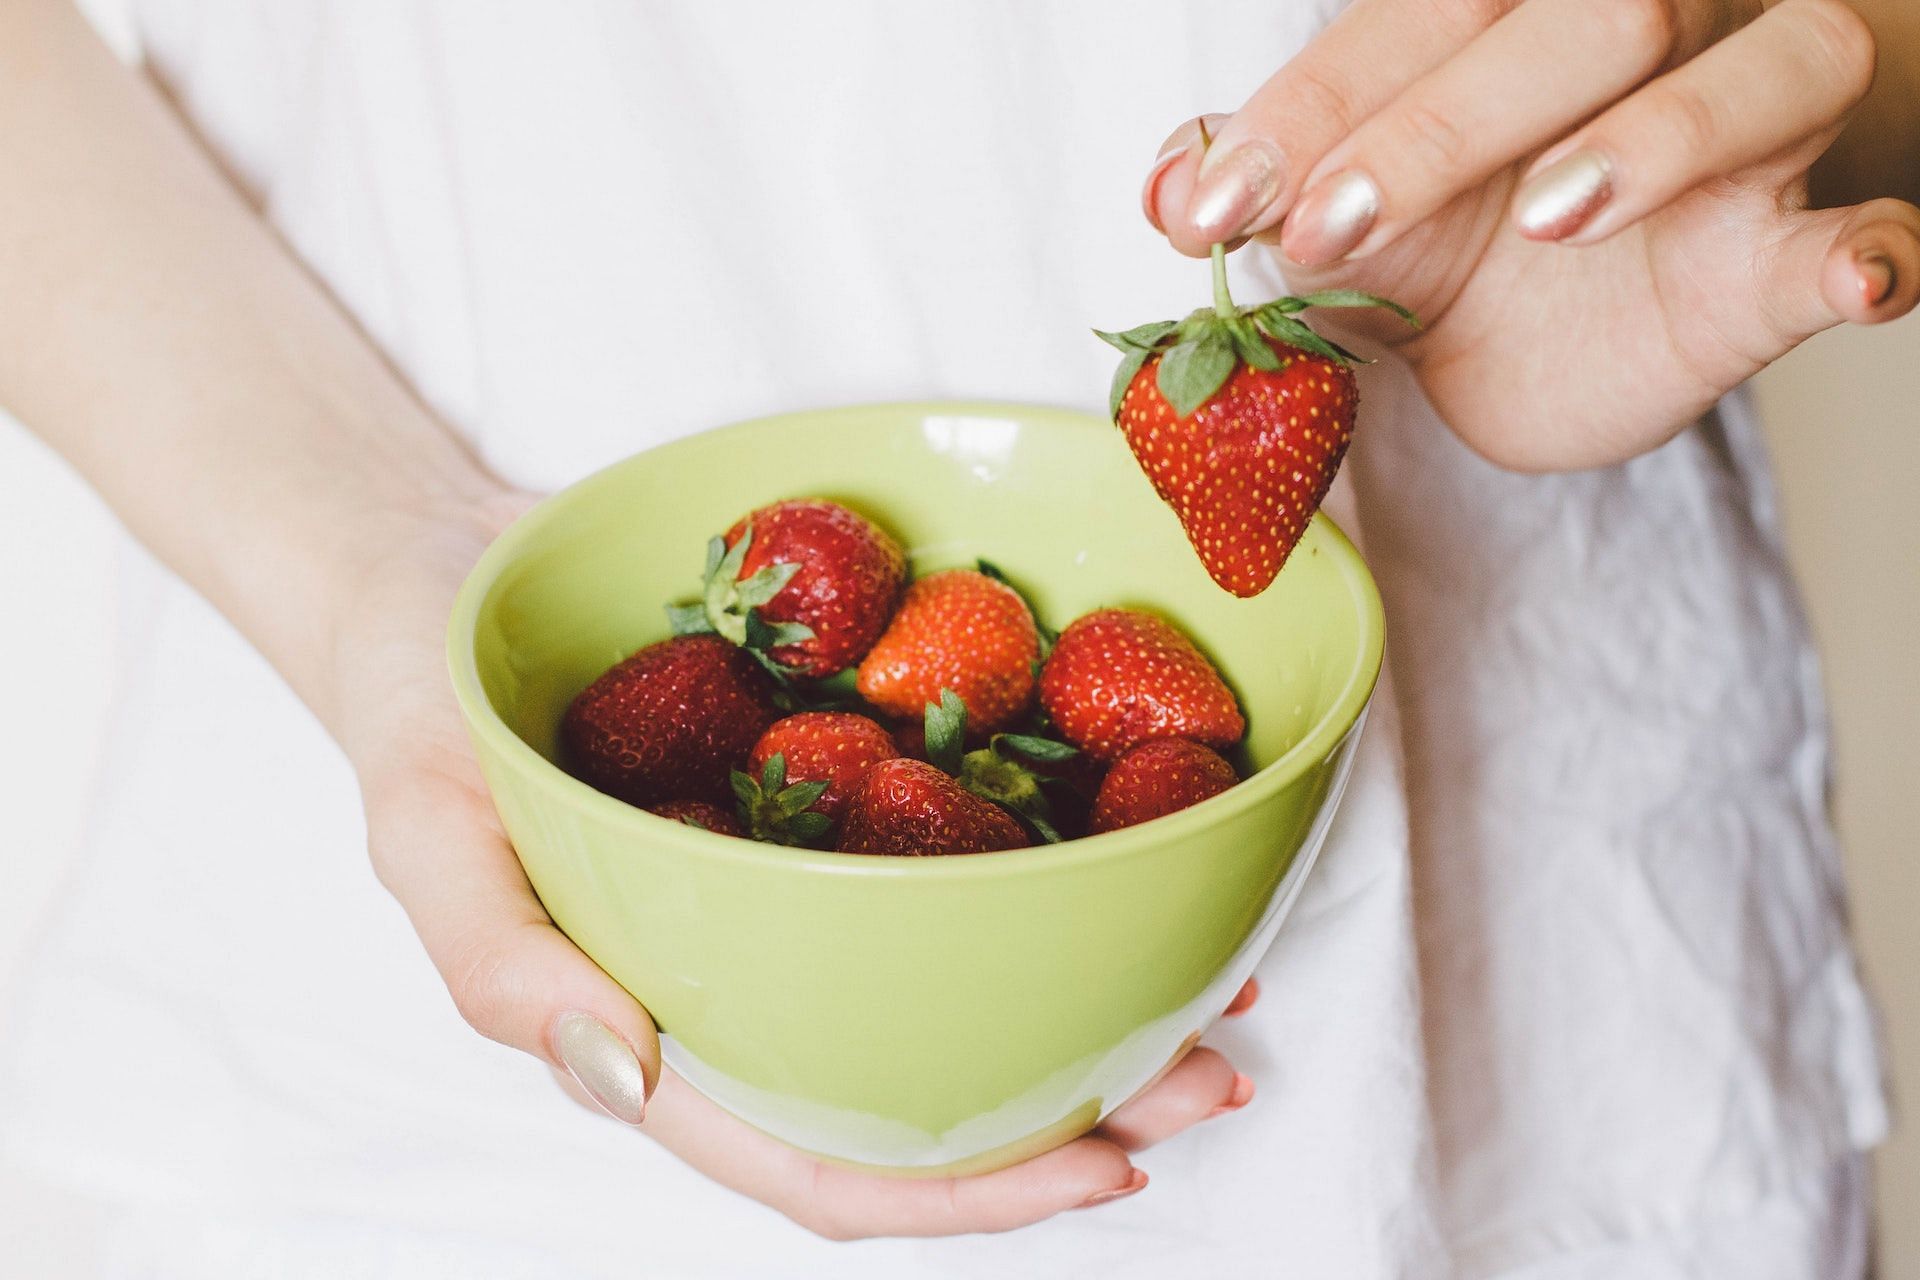 The health benefits of strawberries are numerous. (Photo via Pexels/Kristina Paukshtite)